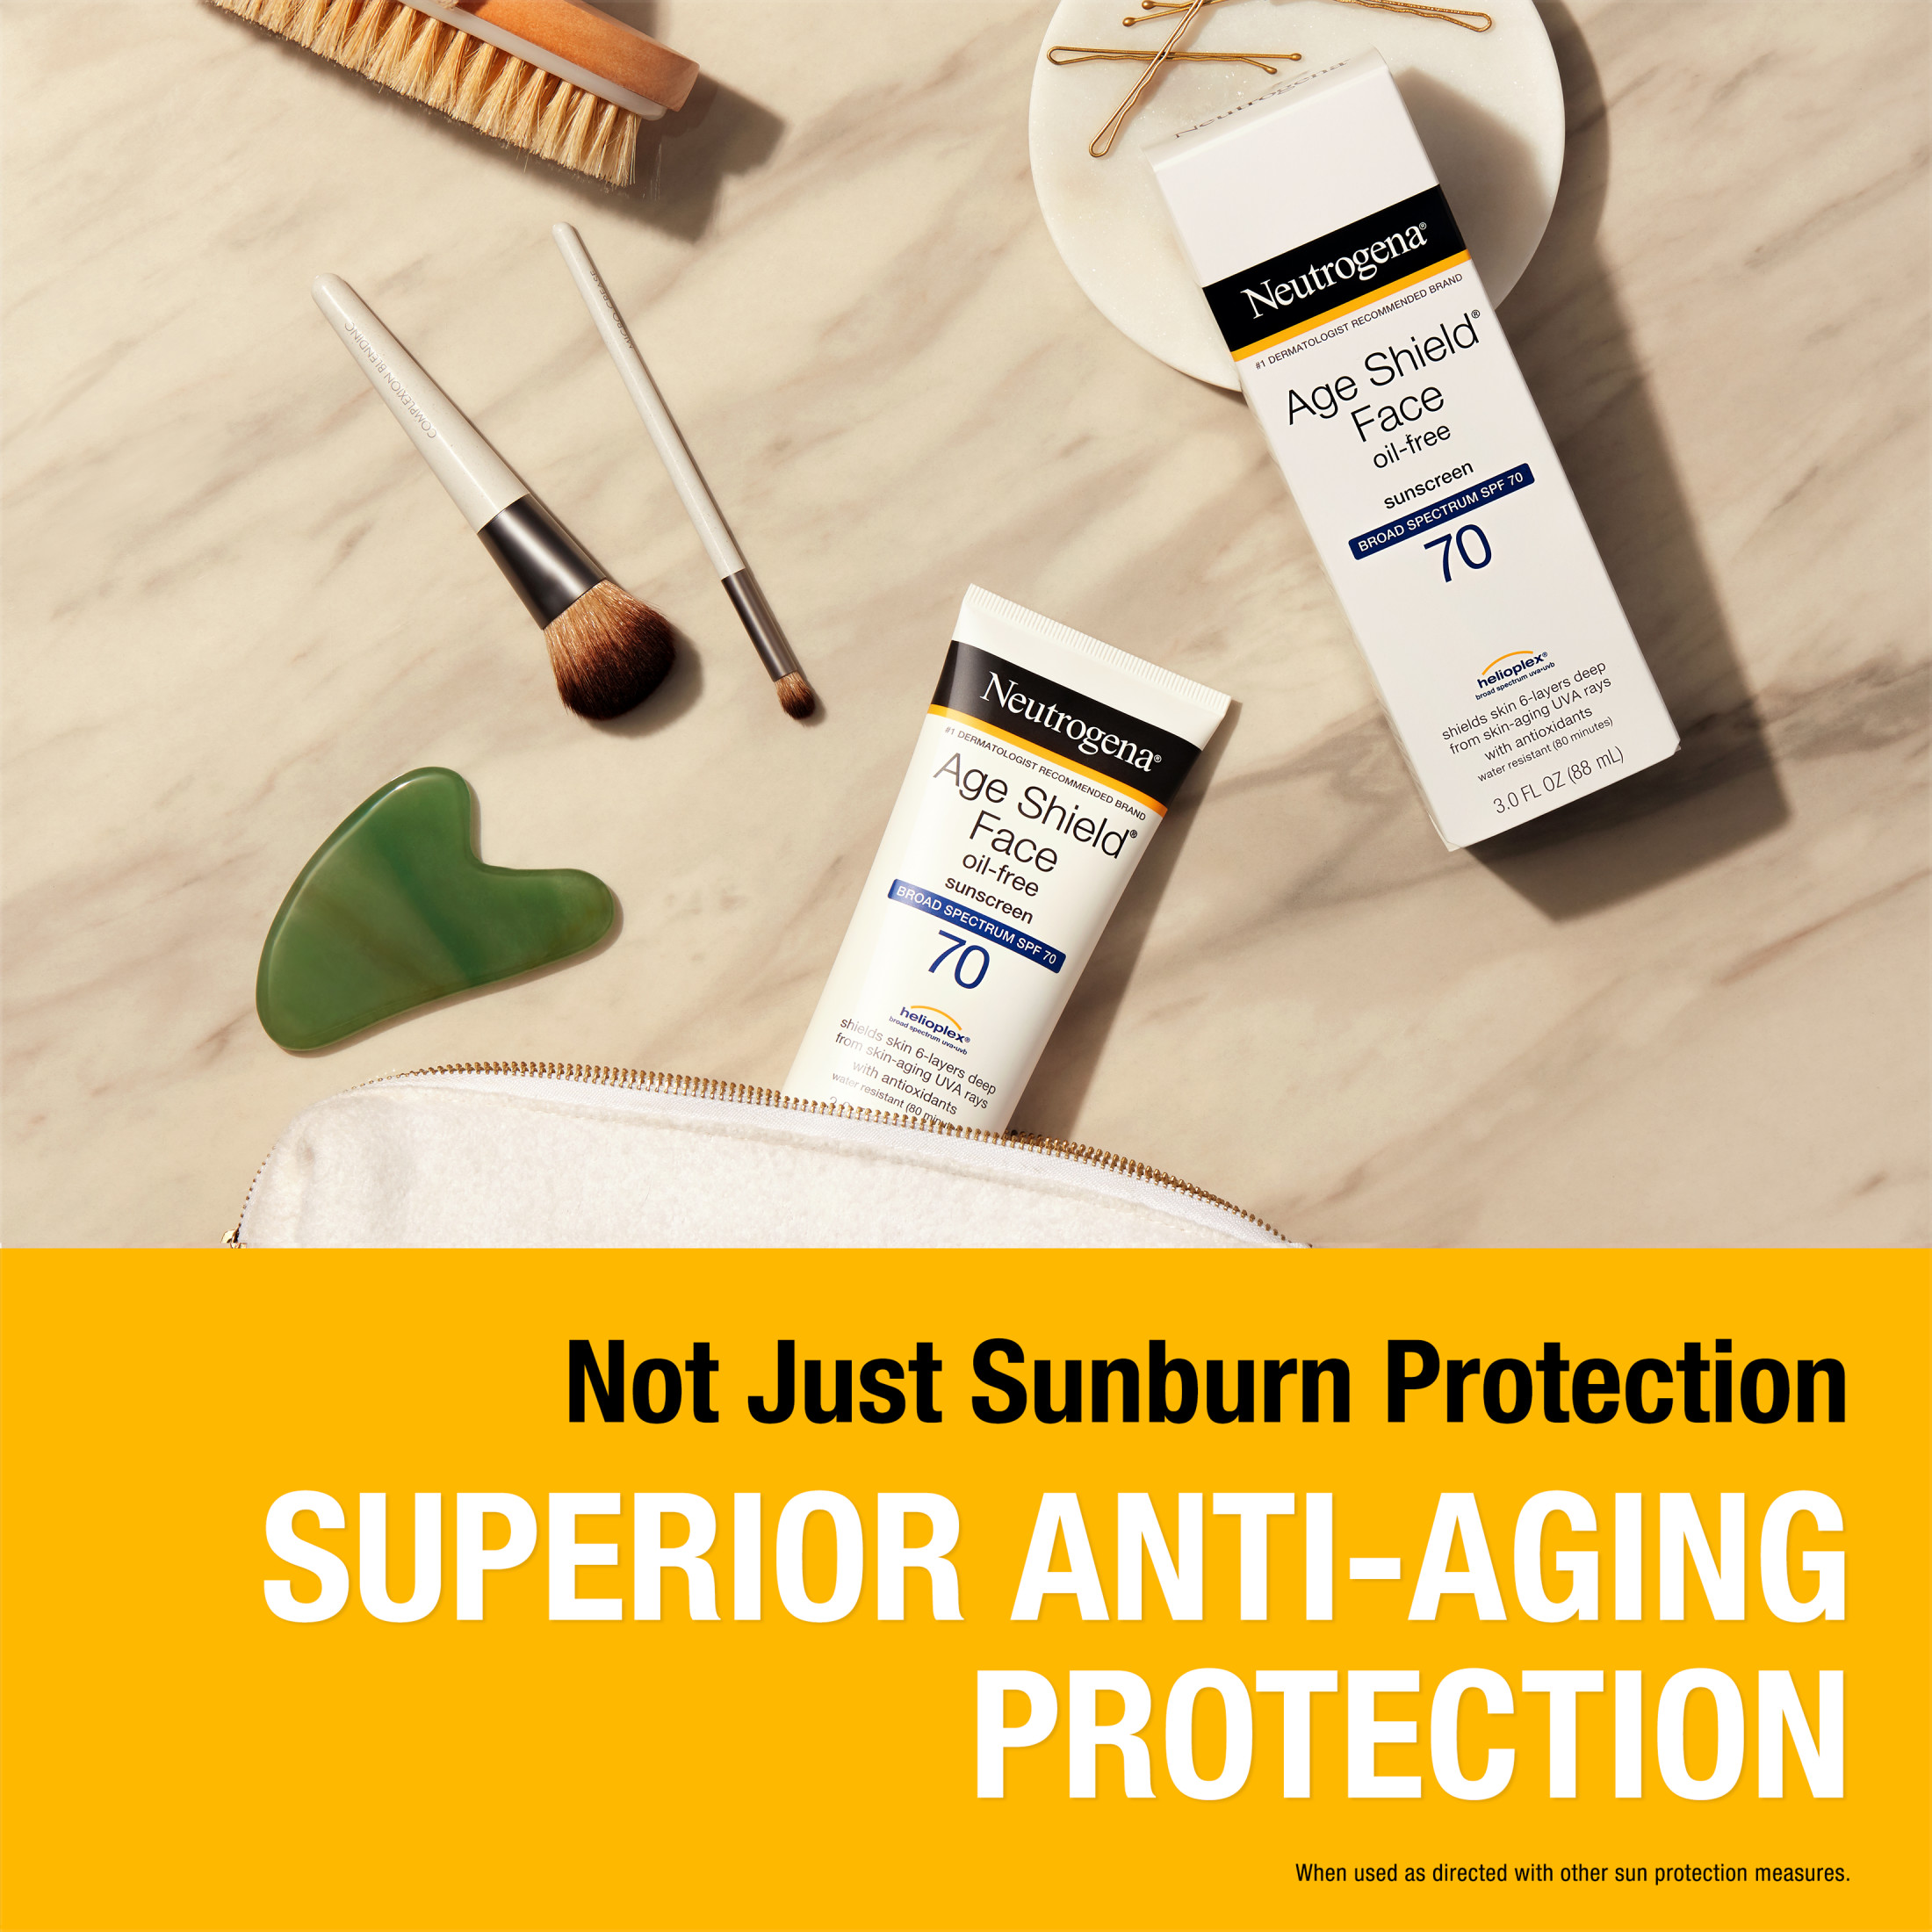 Neutrogena Age Shield Face Oil-Free Sunscreen, SPF 70 Sunblock, 3 fl oz - image 4 of 8